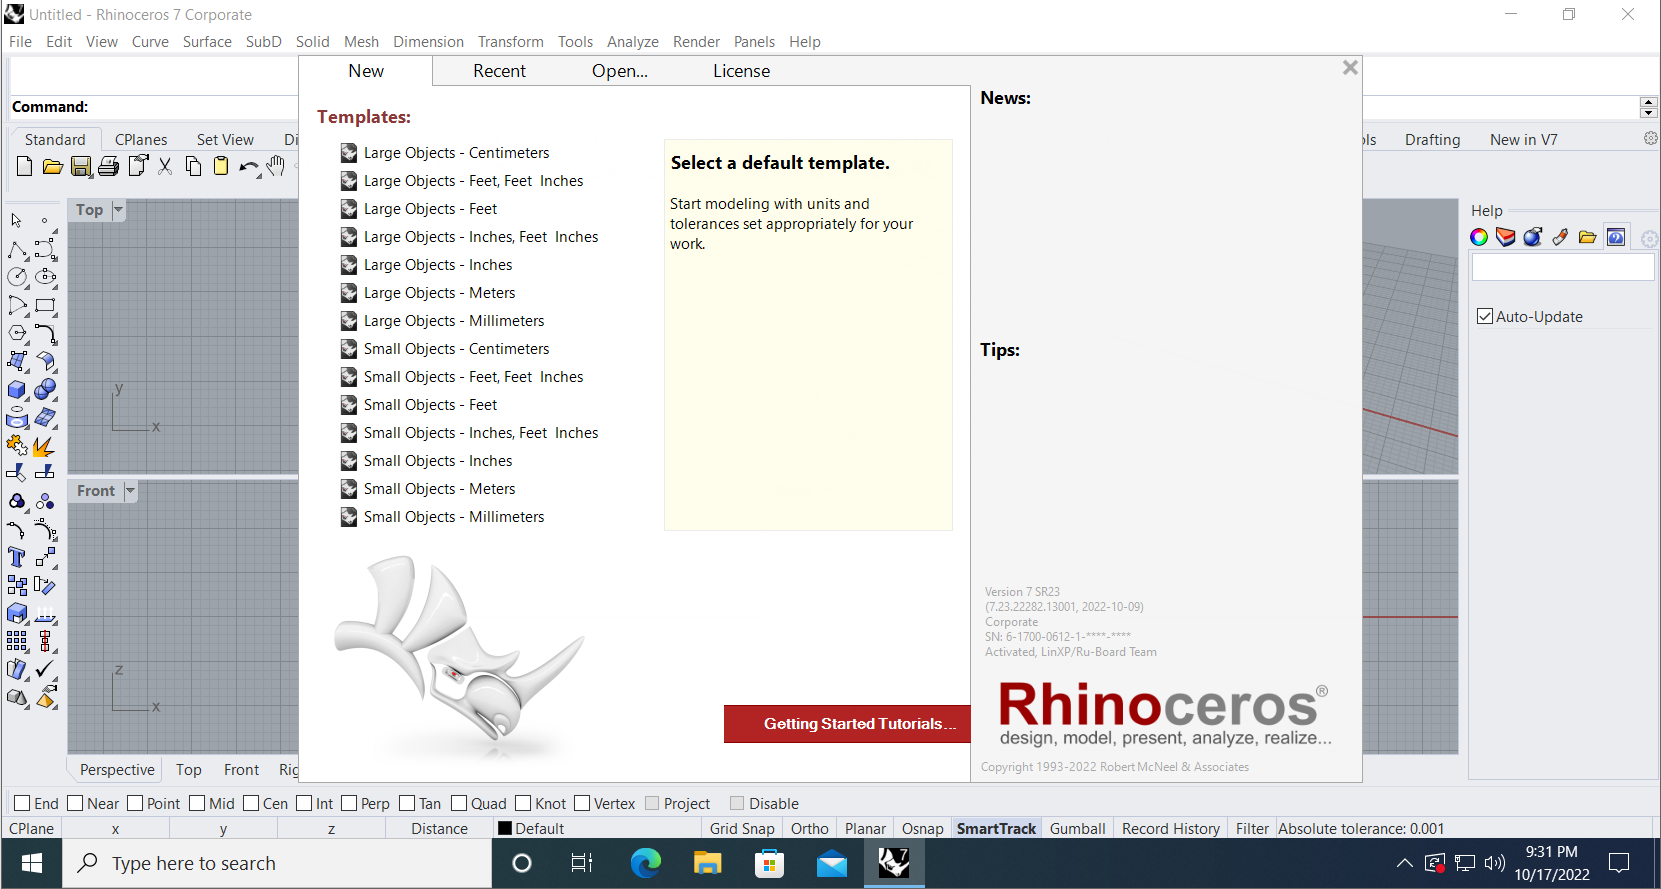 Working with Rhinoceros 7.23.22282.13001 full